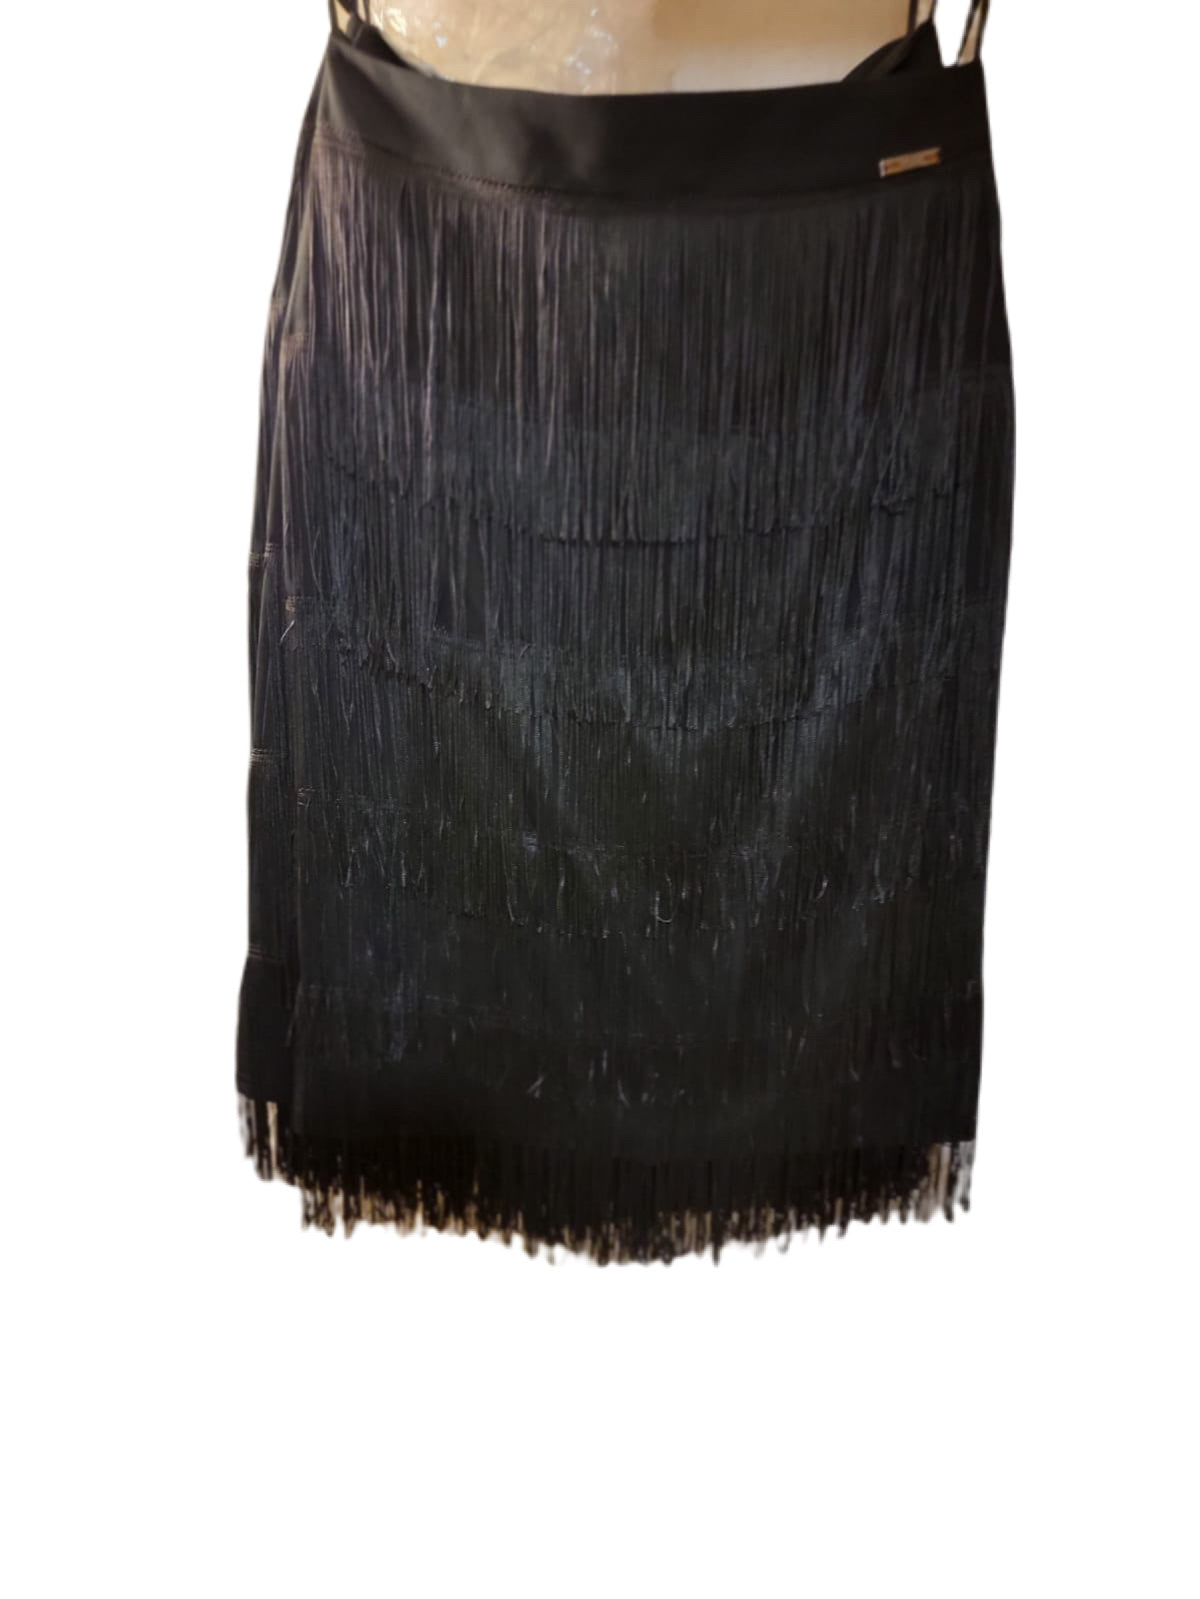 Short Bottom Ruffled Women's Skirt - Godshandfashion - 44-medium / black